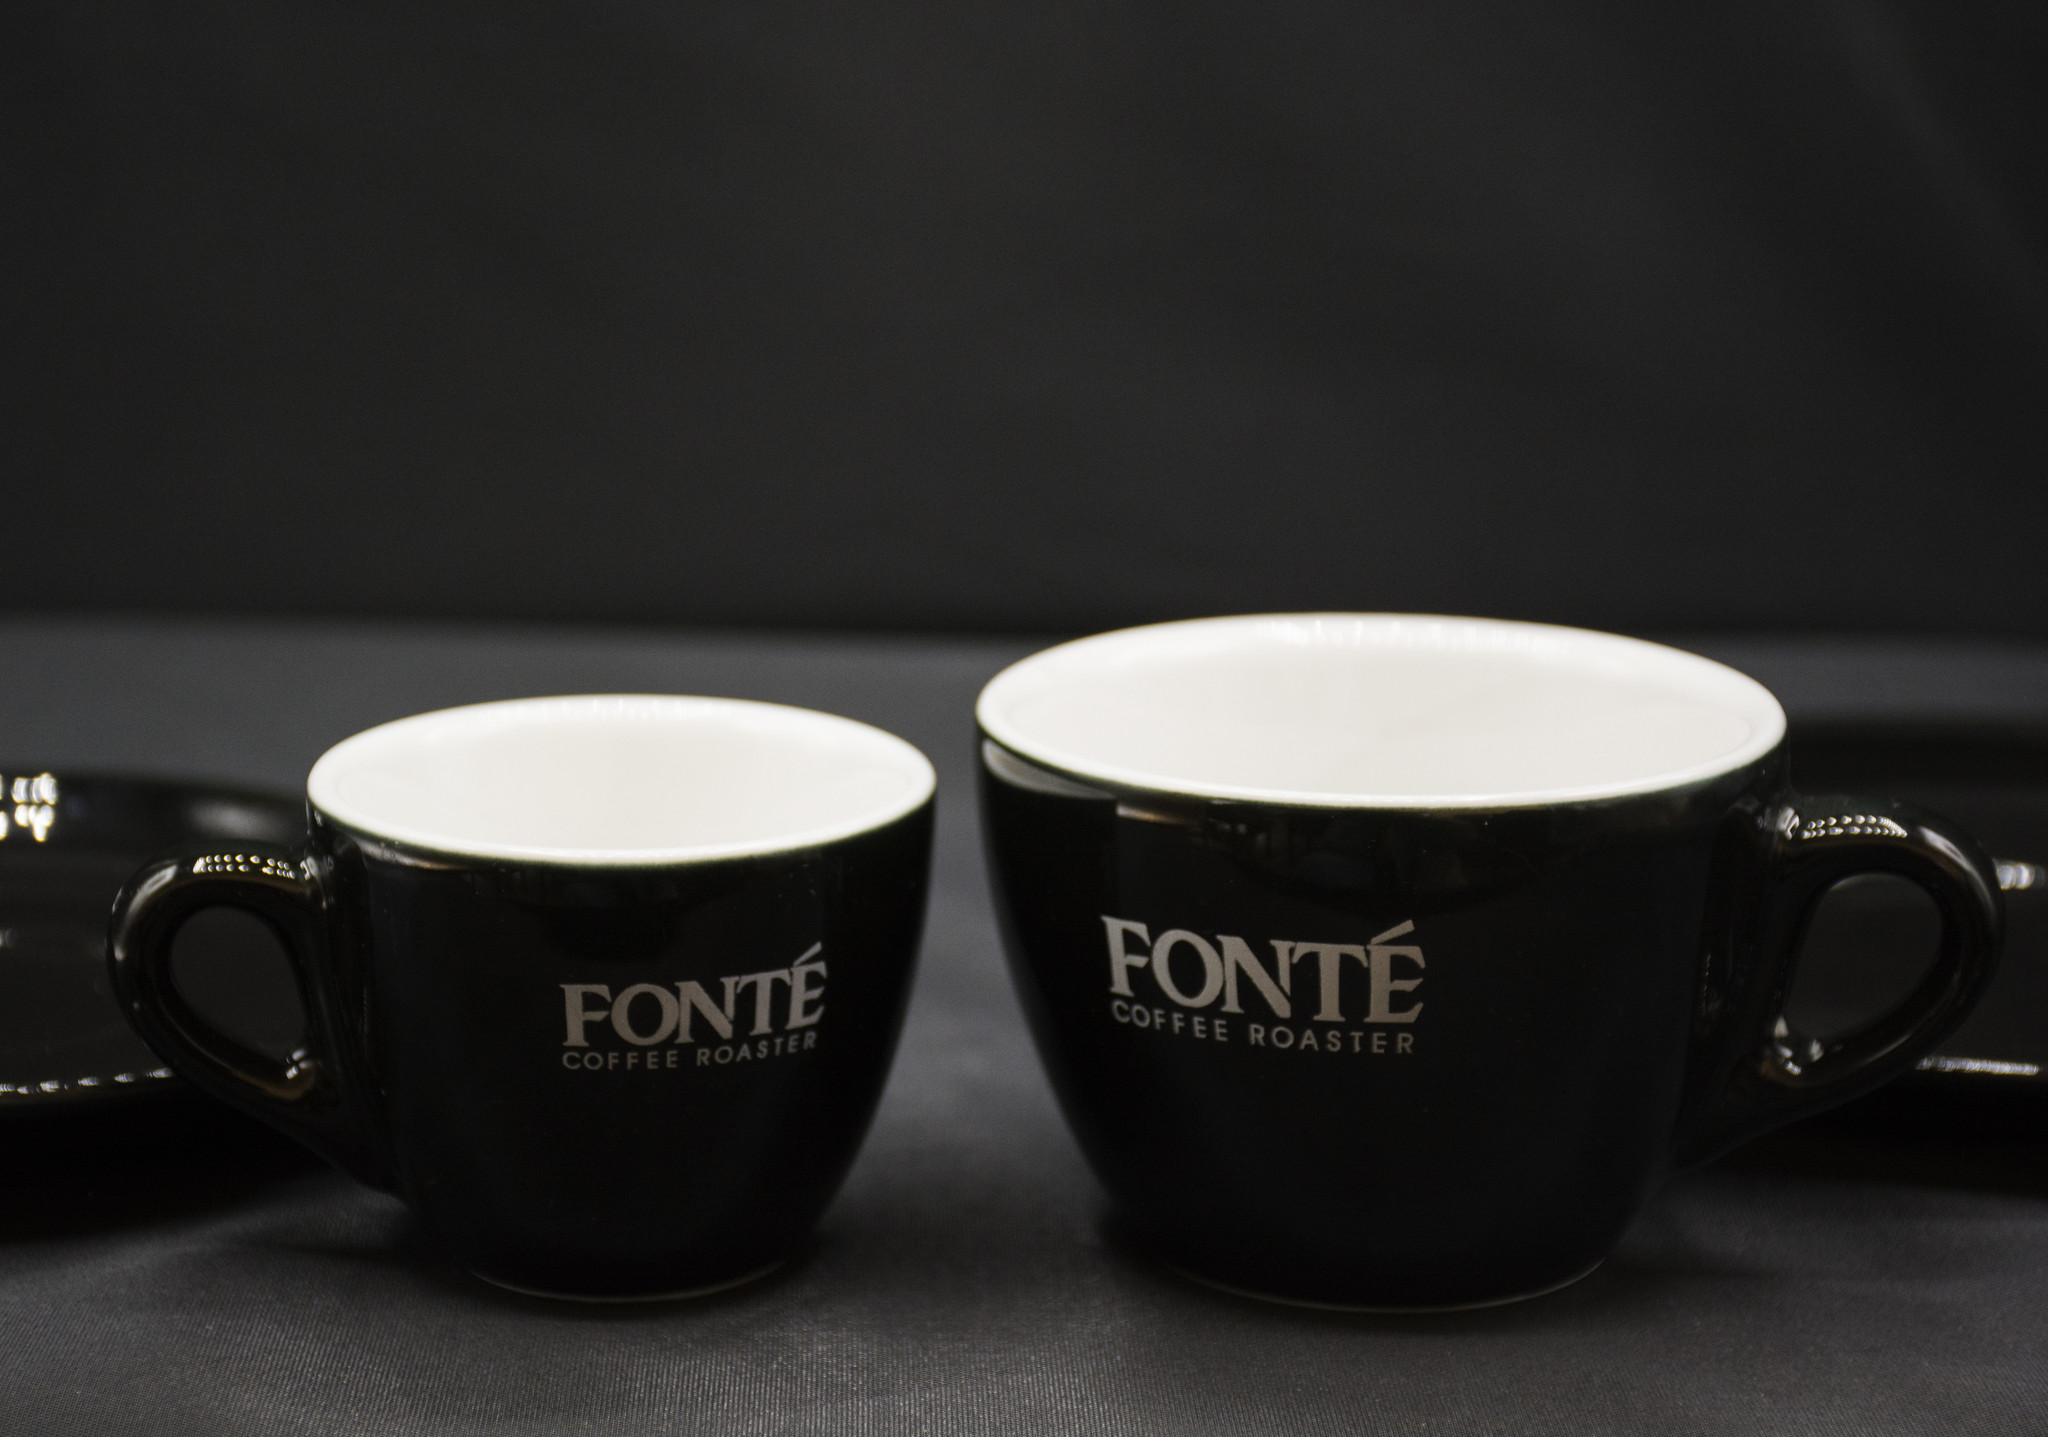 Fonte Coffee Roaster 3 oz and 6 oz Ceramic Coffee Cups